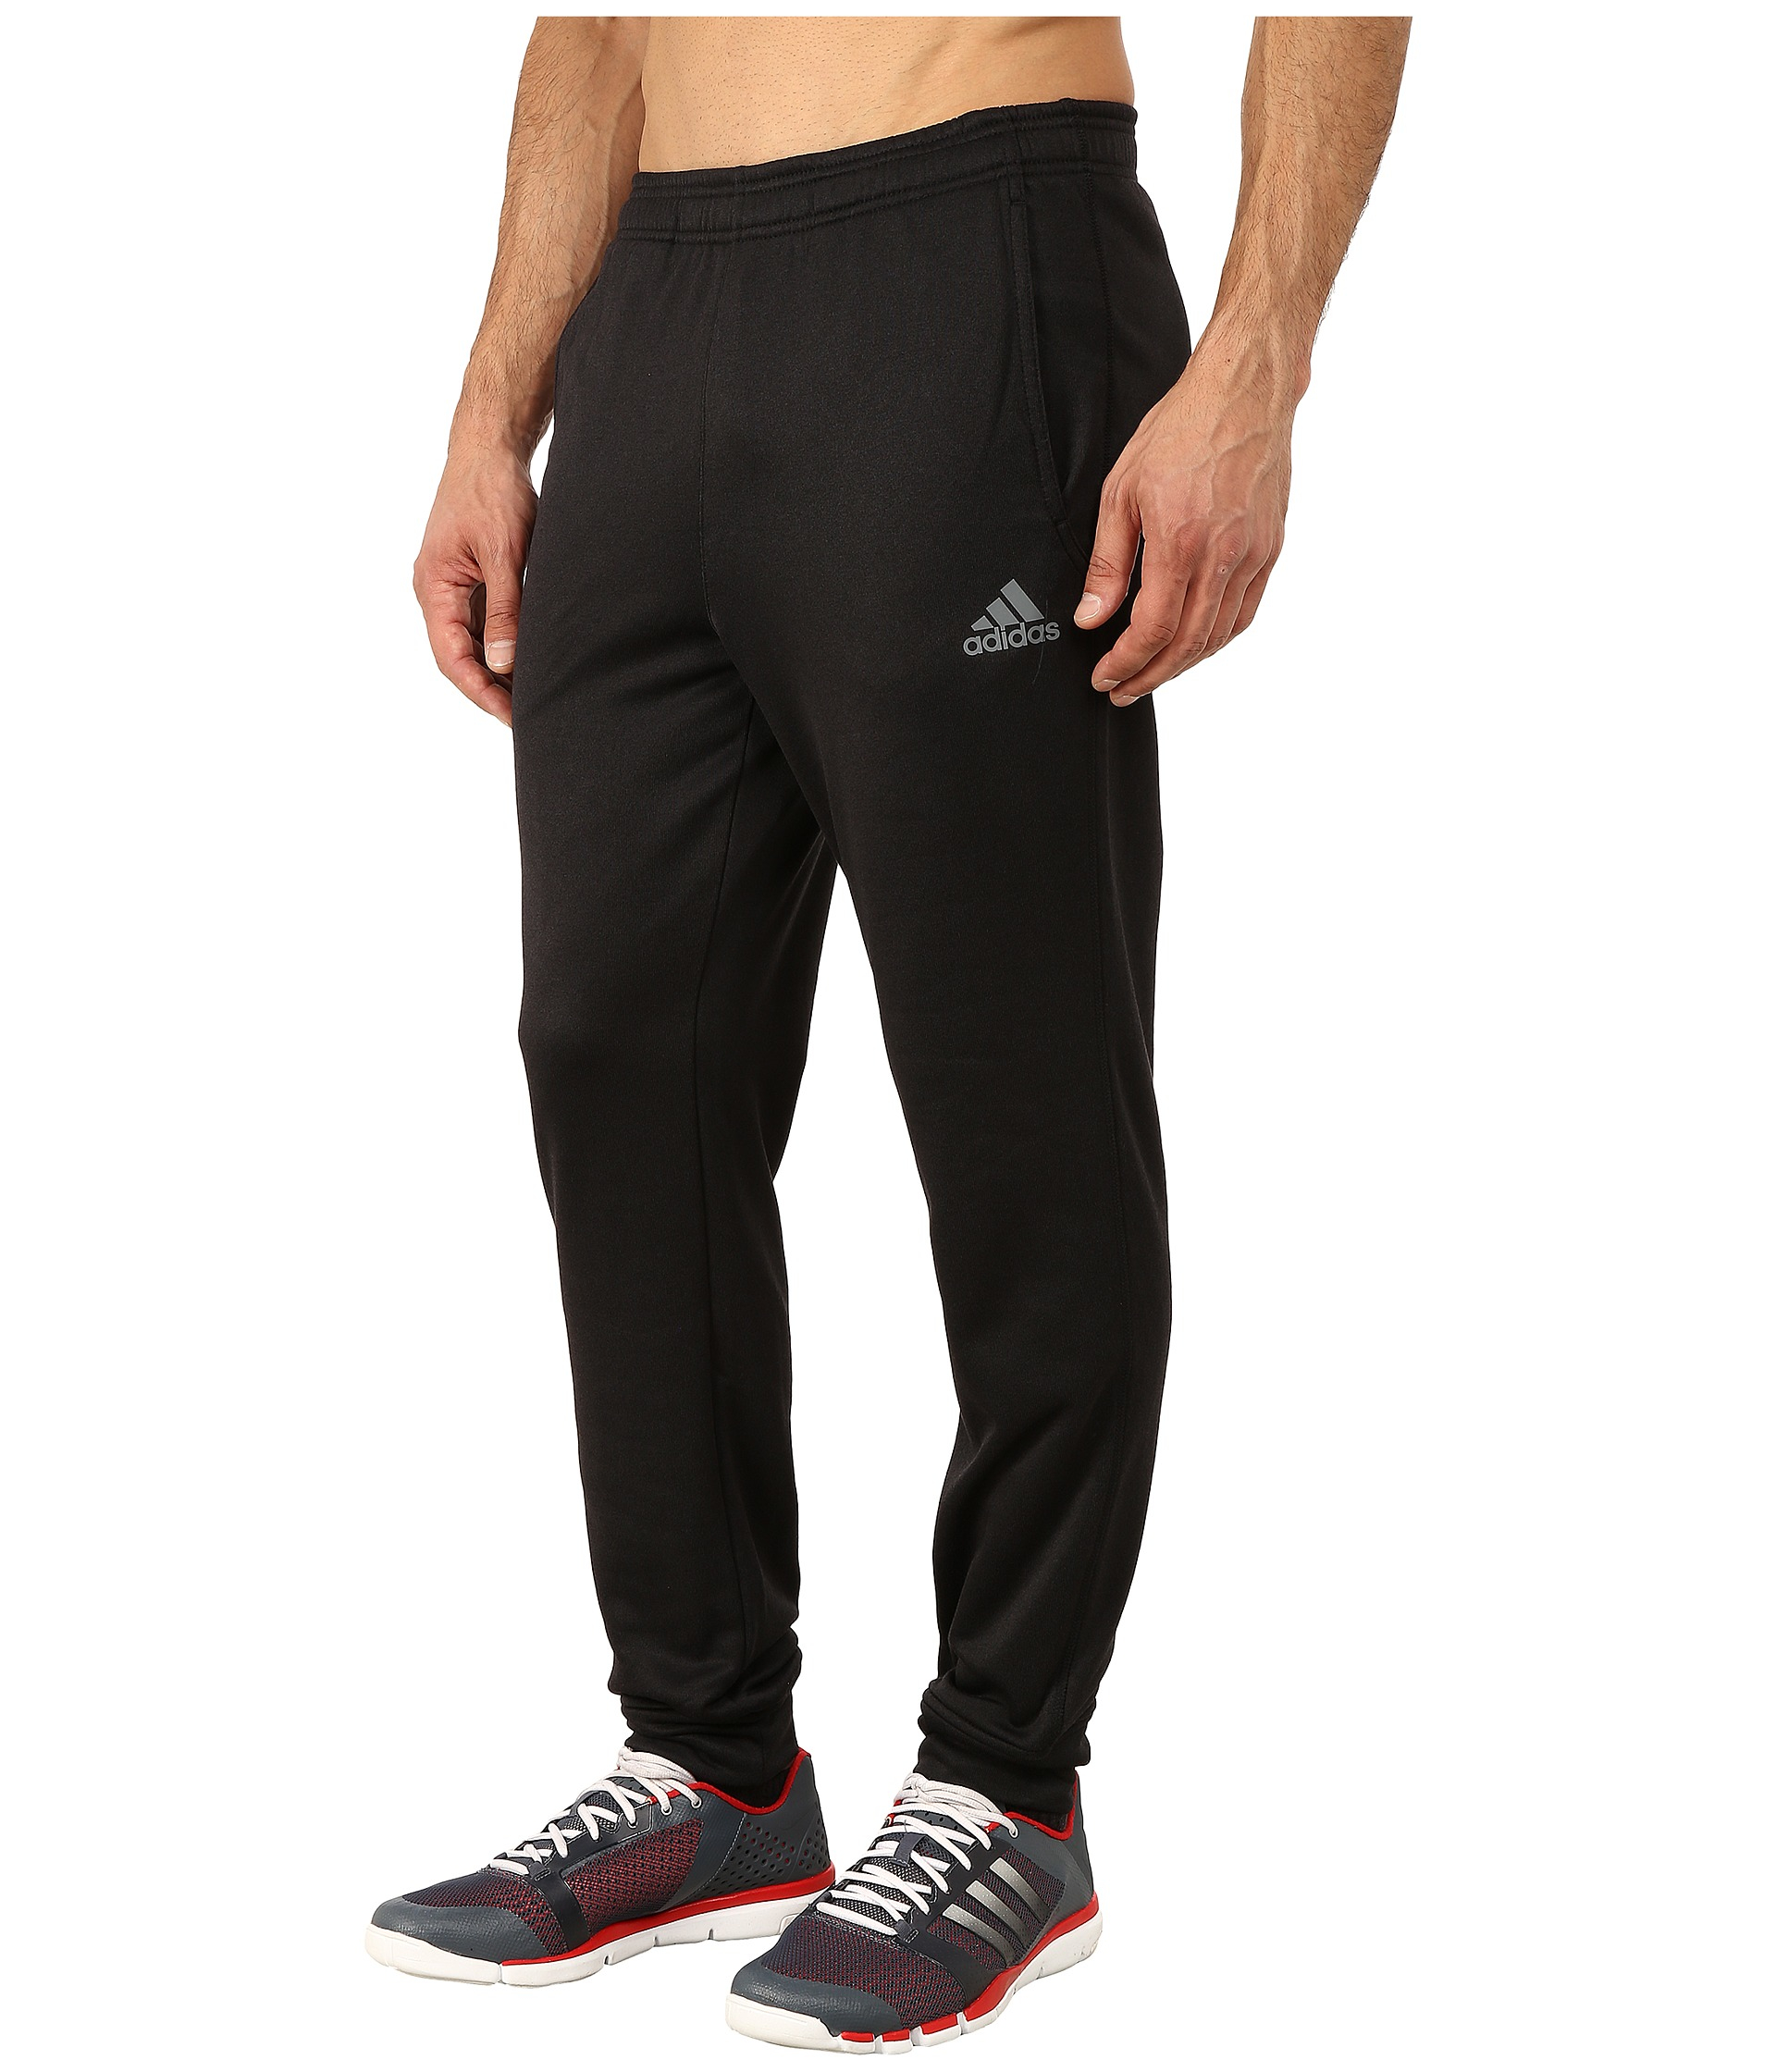 Lyst - Adidas Originals Ultimate Fleece Tapered Pants in Black for Men